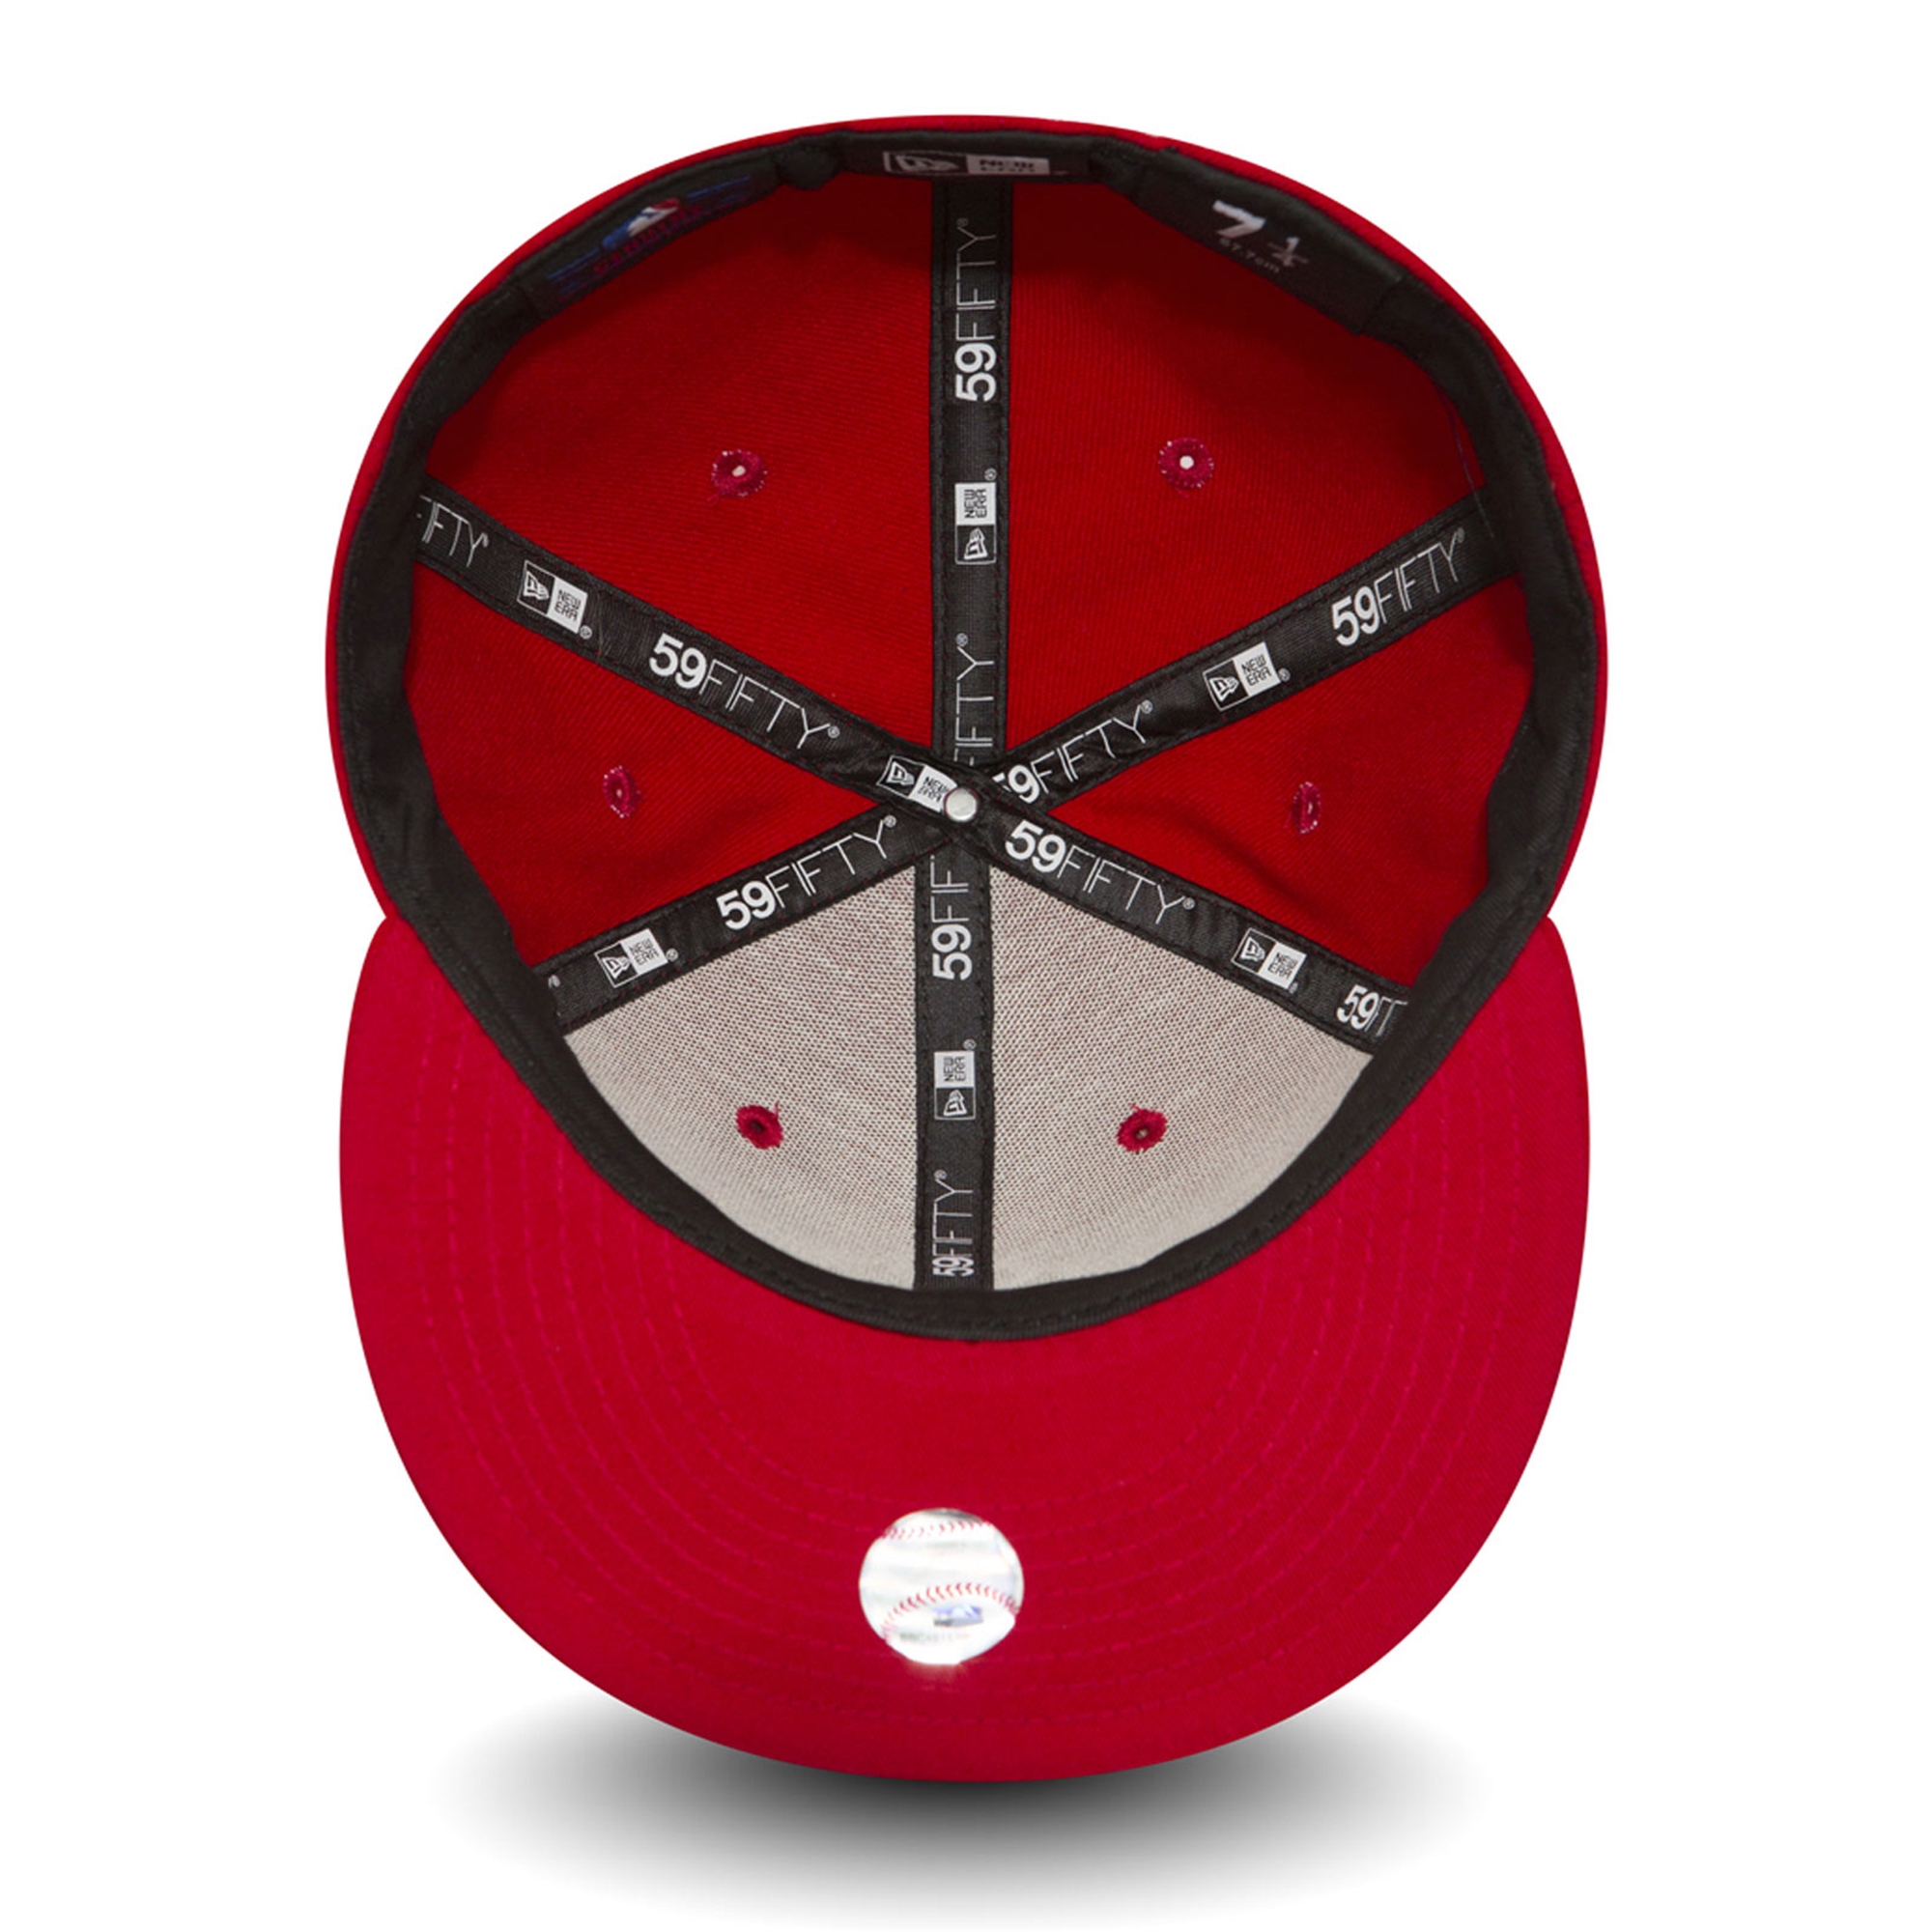 New Era Cap 59Fifty Fitted New York Yankees Basecap MLB Baseball Cap